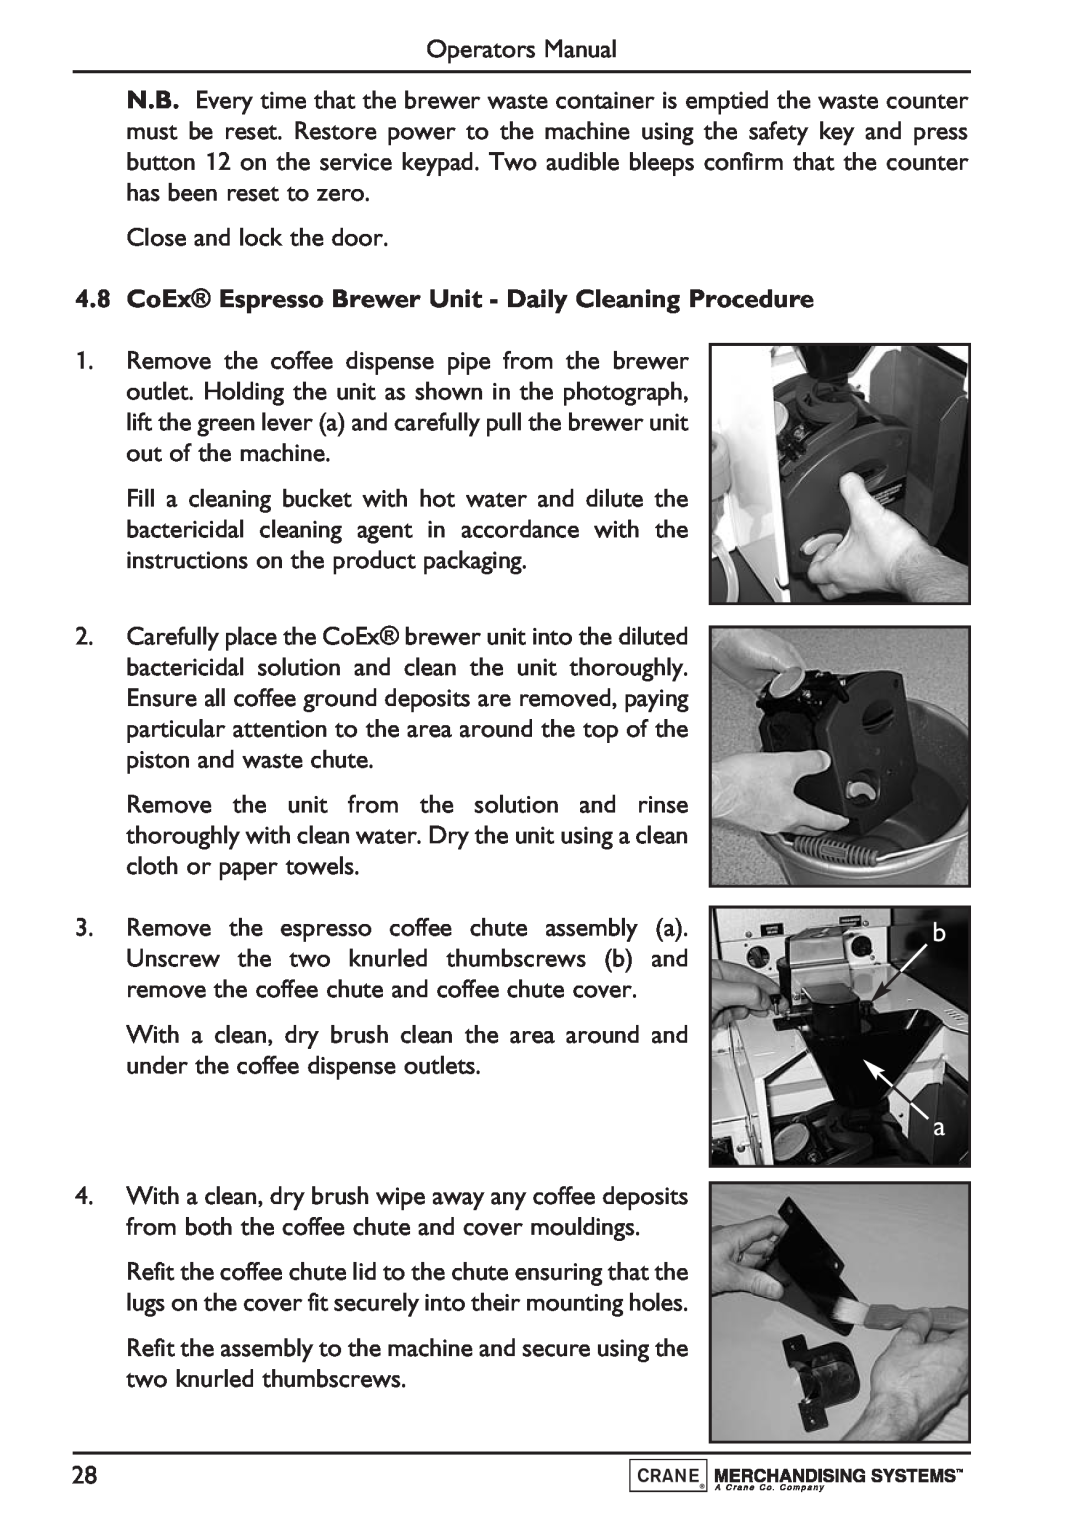 Evolution Technologies PR10908000 manual CoEx Espresso Brewer Unit - Daily Cleaning Procedure 